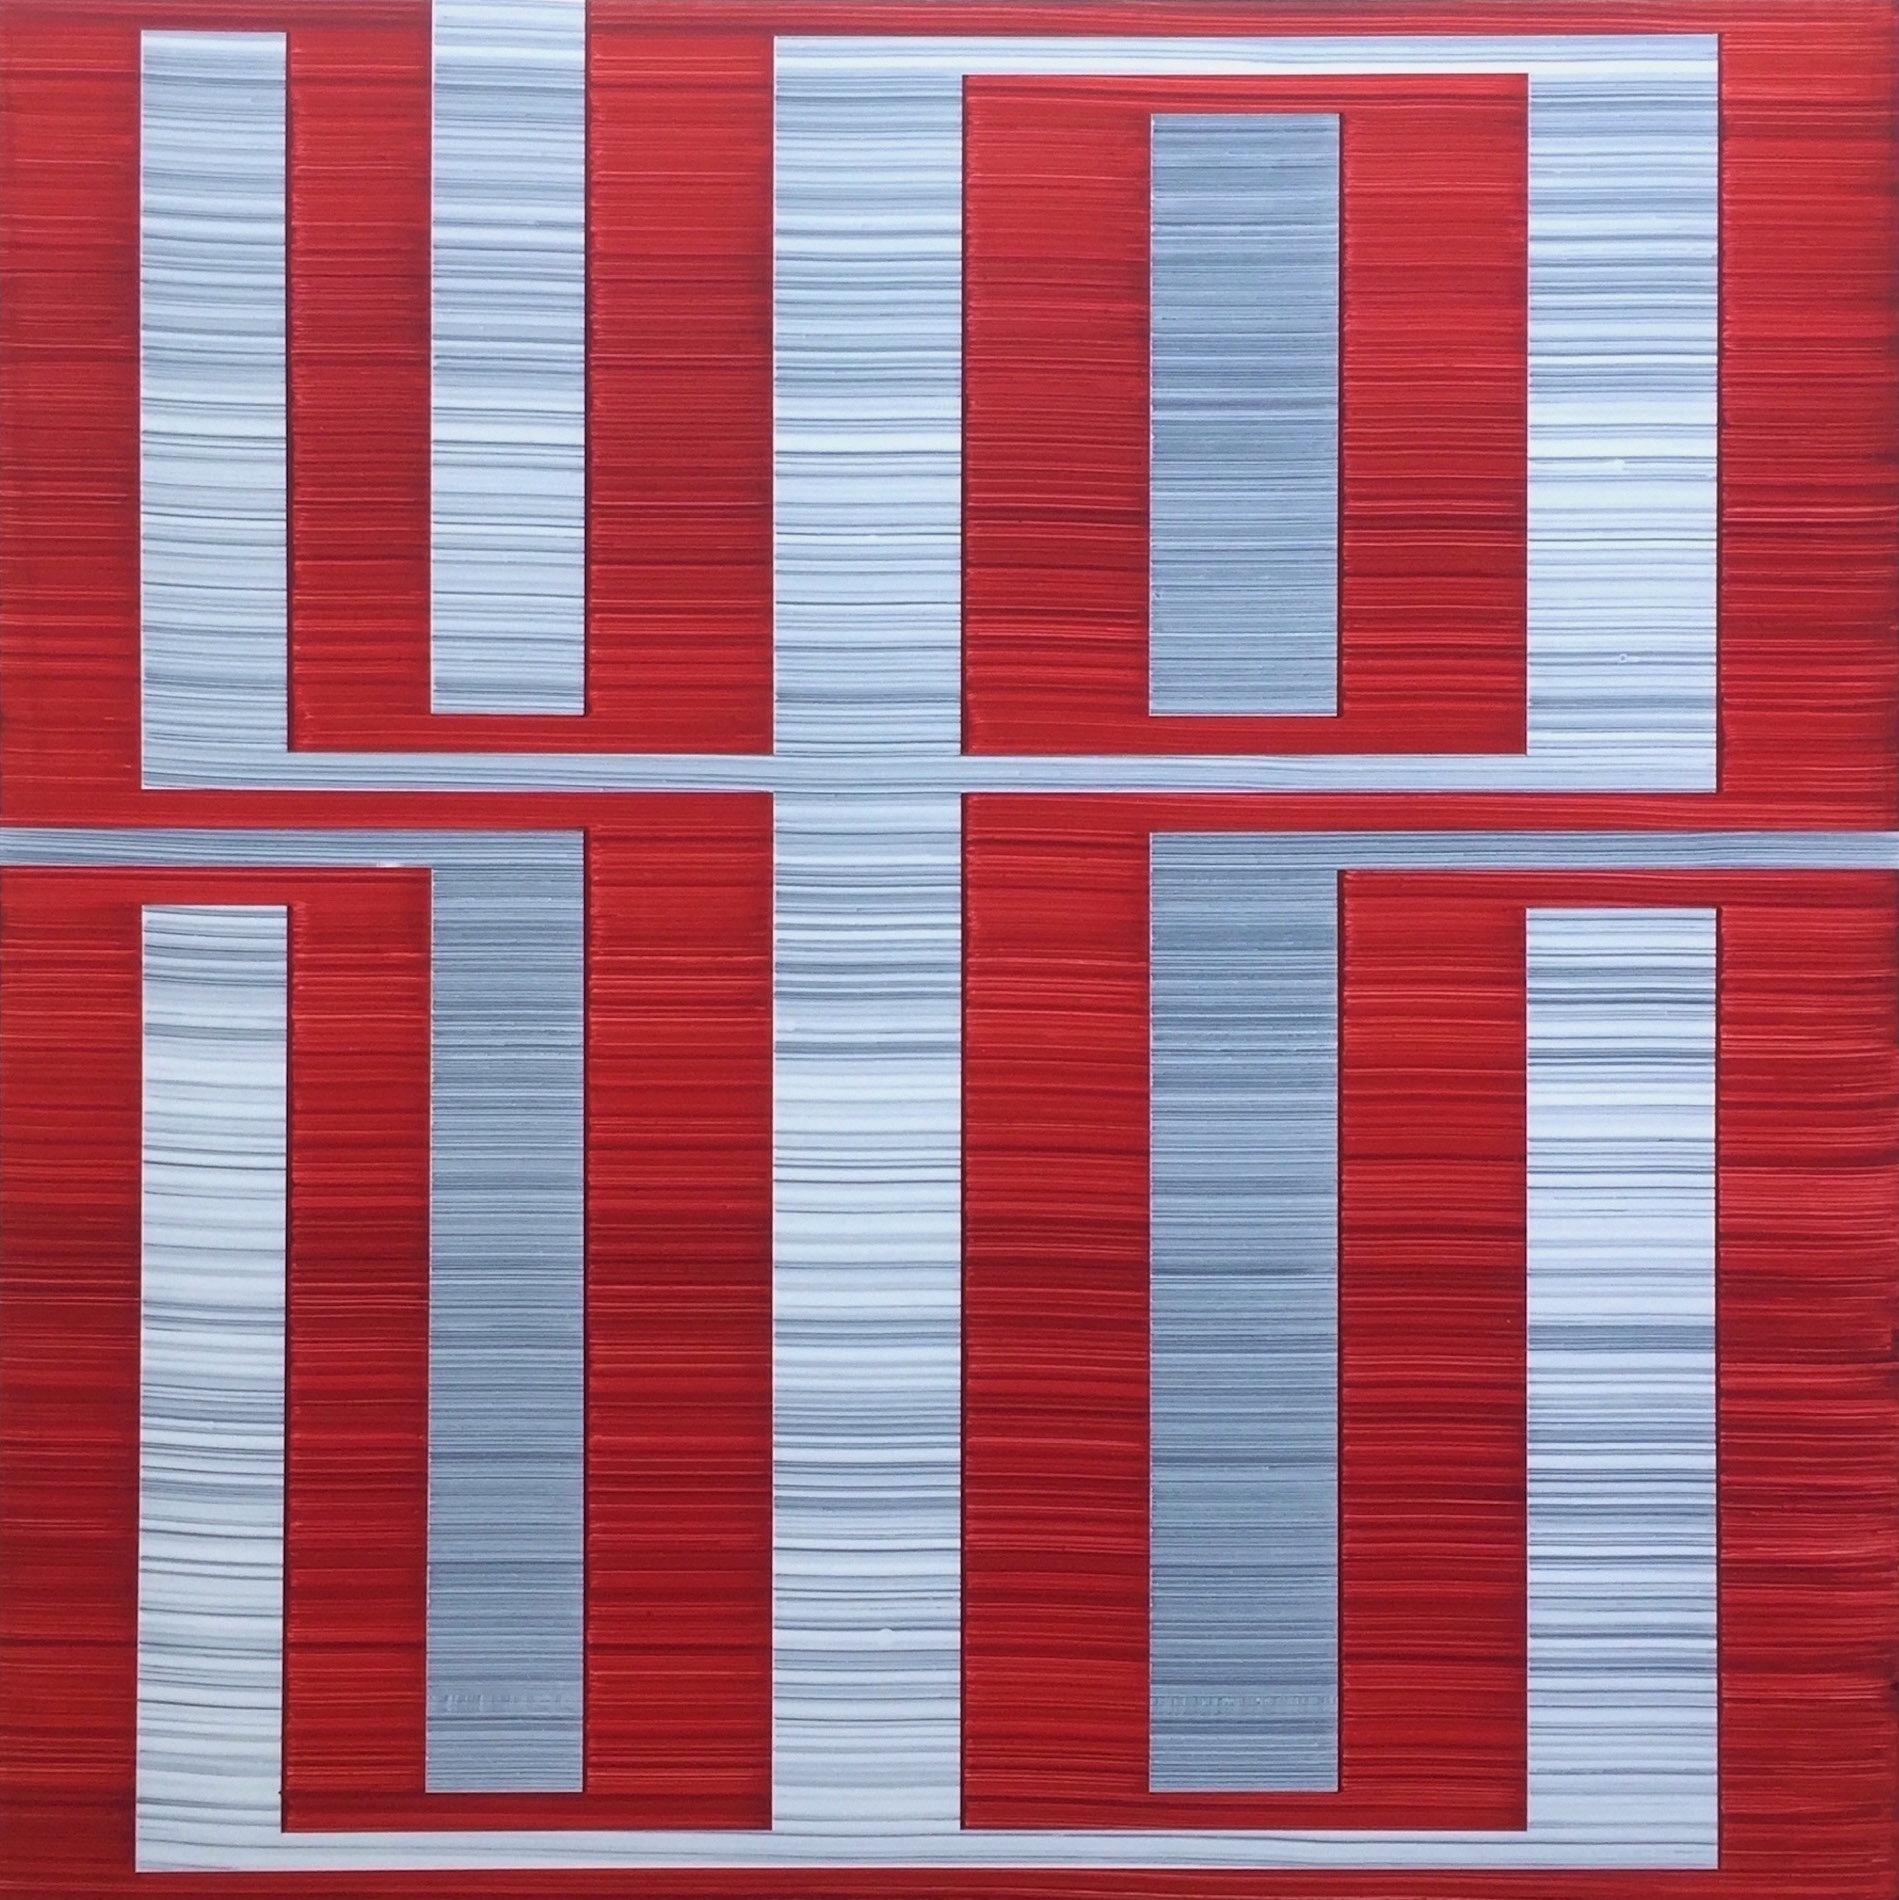 ERIK SPEHN | The Son, 24 x 24 inches / 61 x 61 cm, acrylic on muslin on panel, 2021